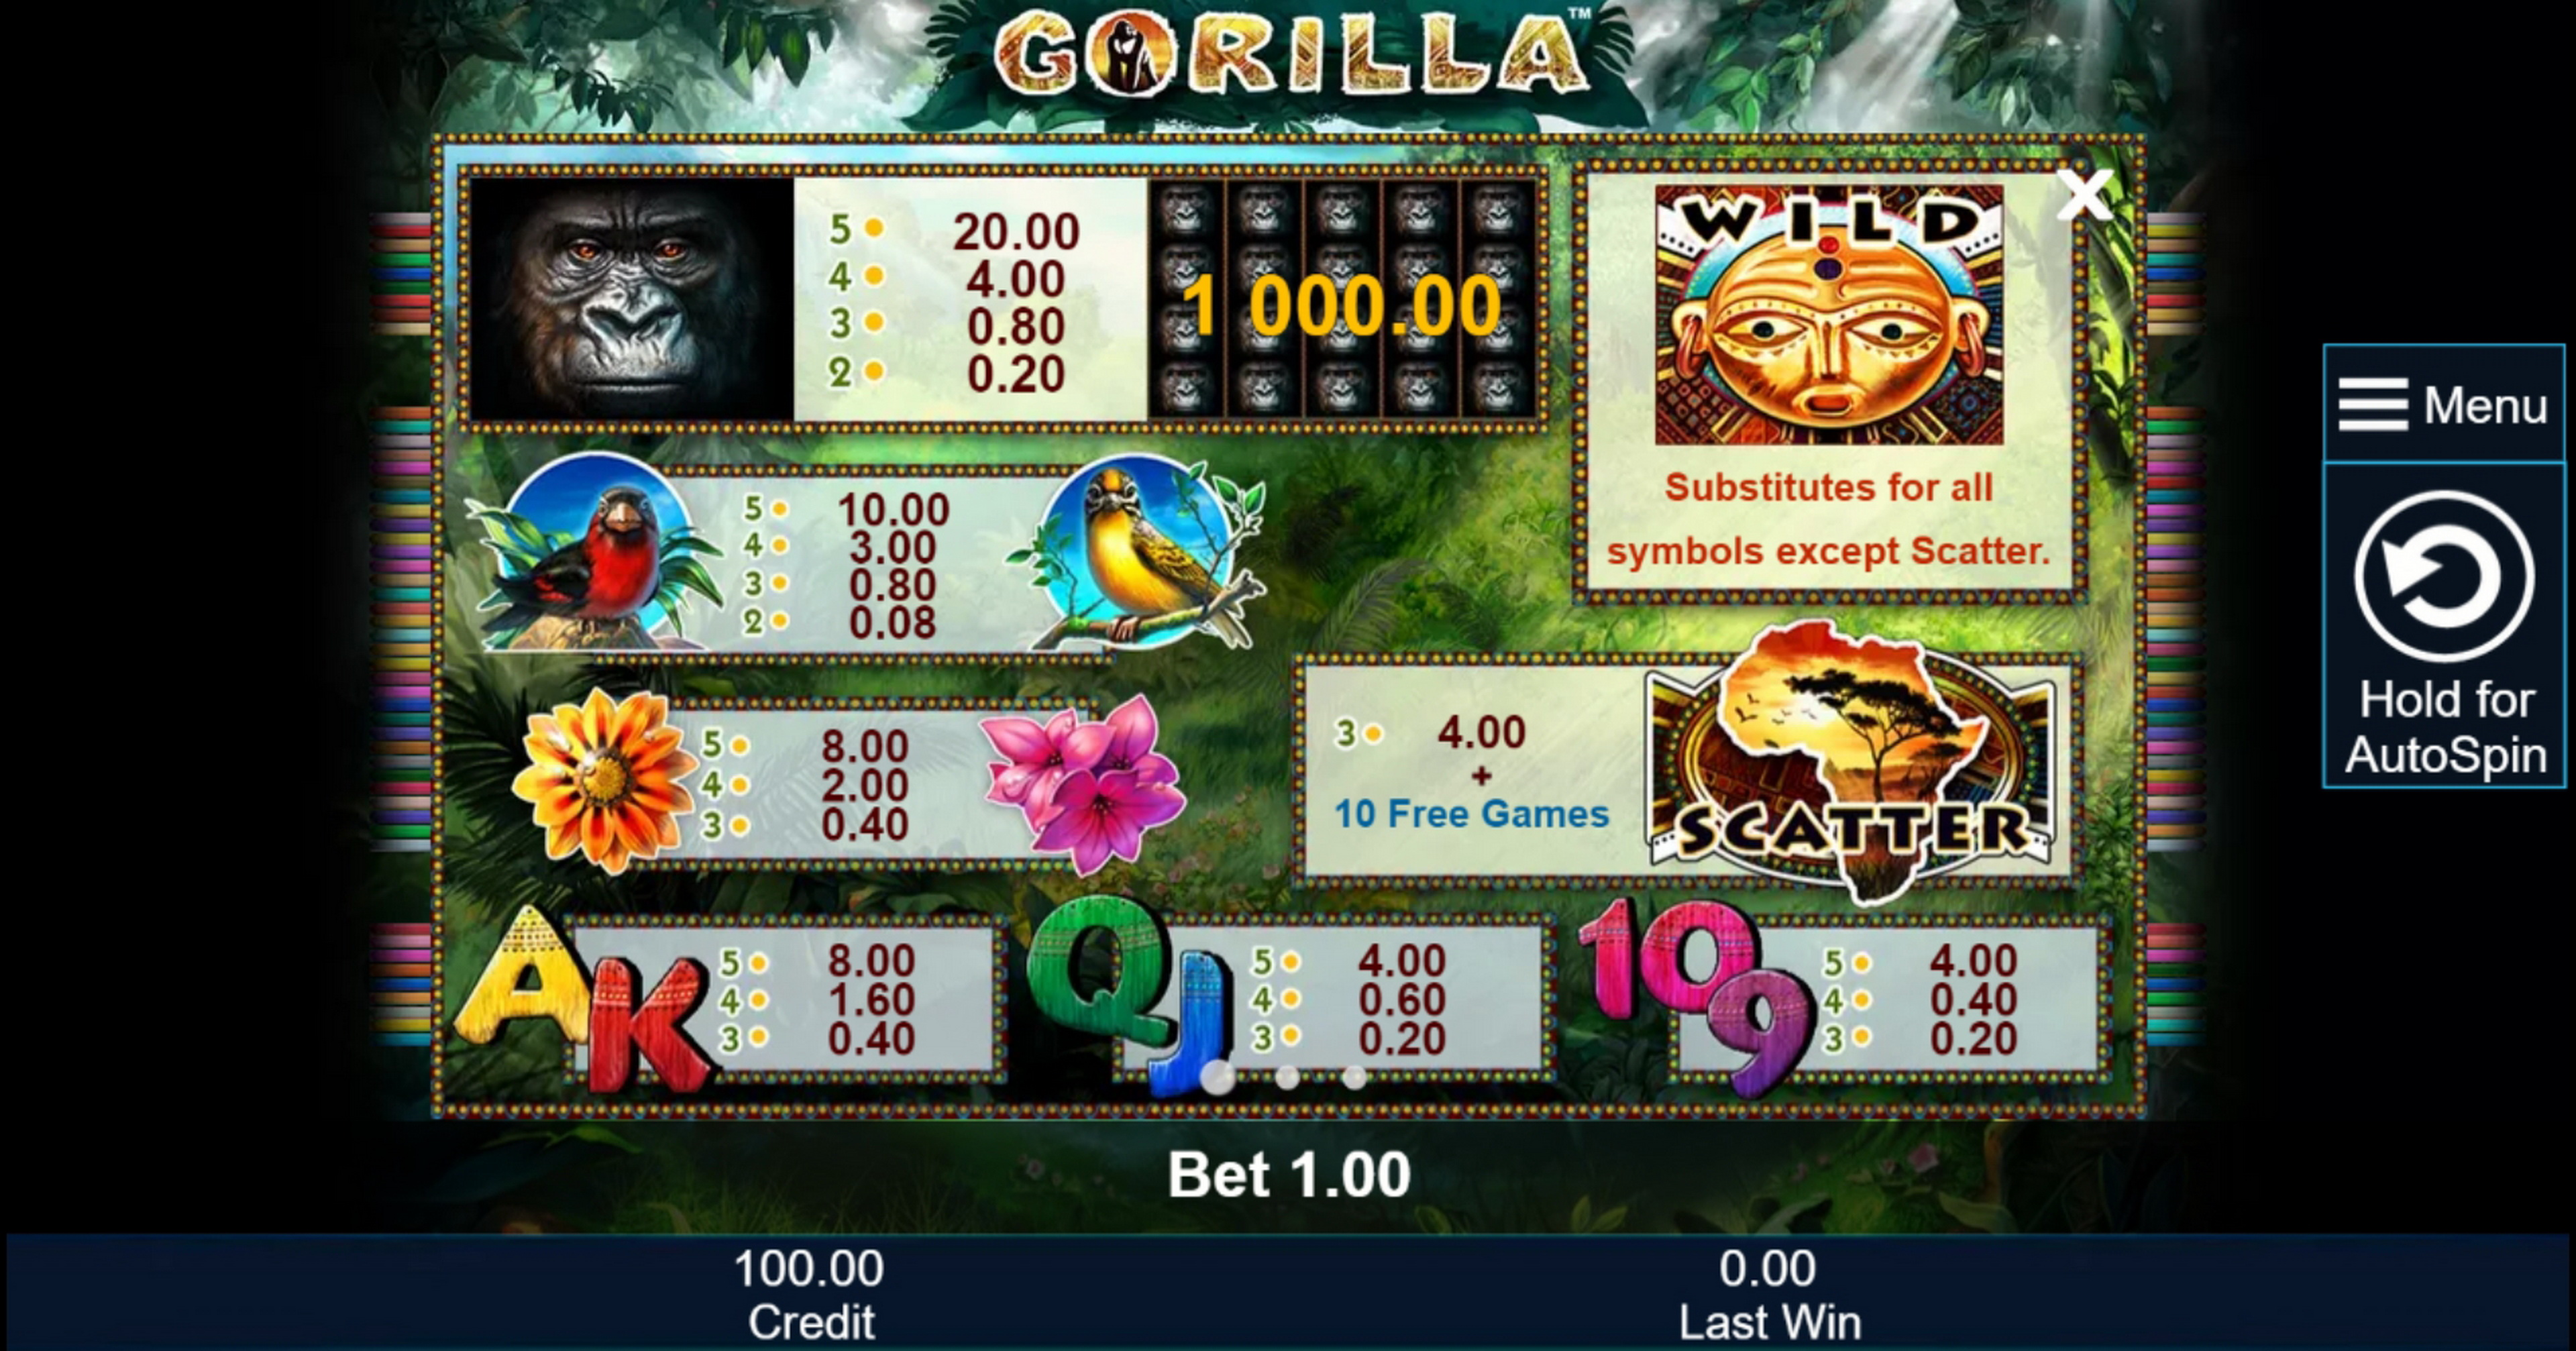 Info of Gorilla Slot Game by Greentube